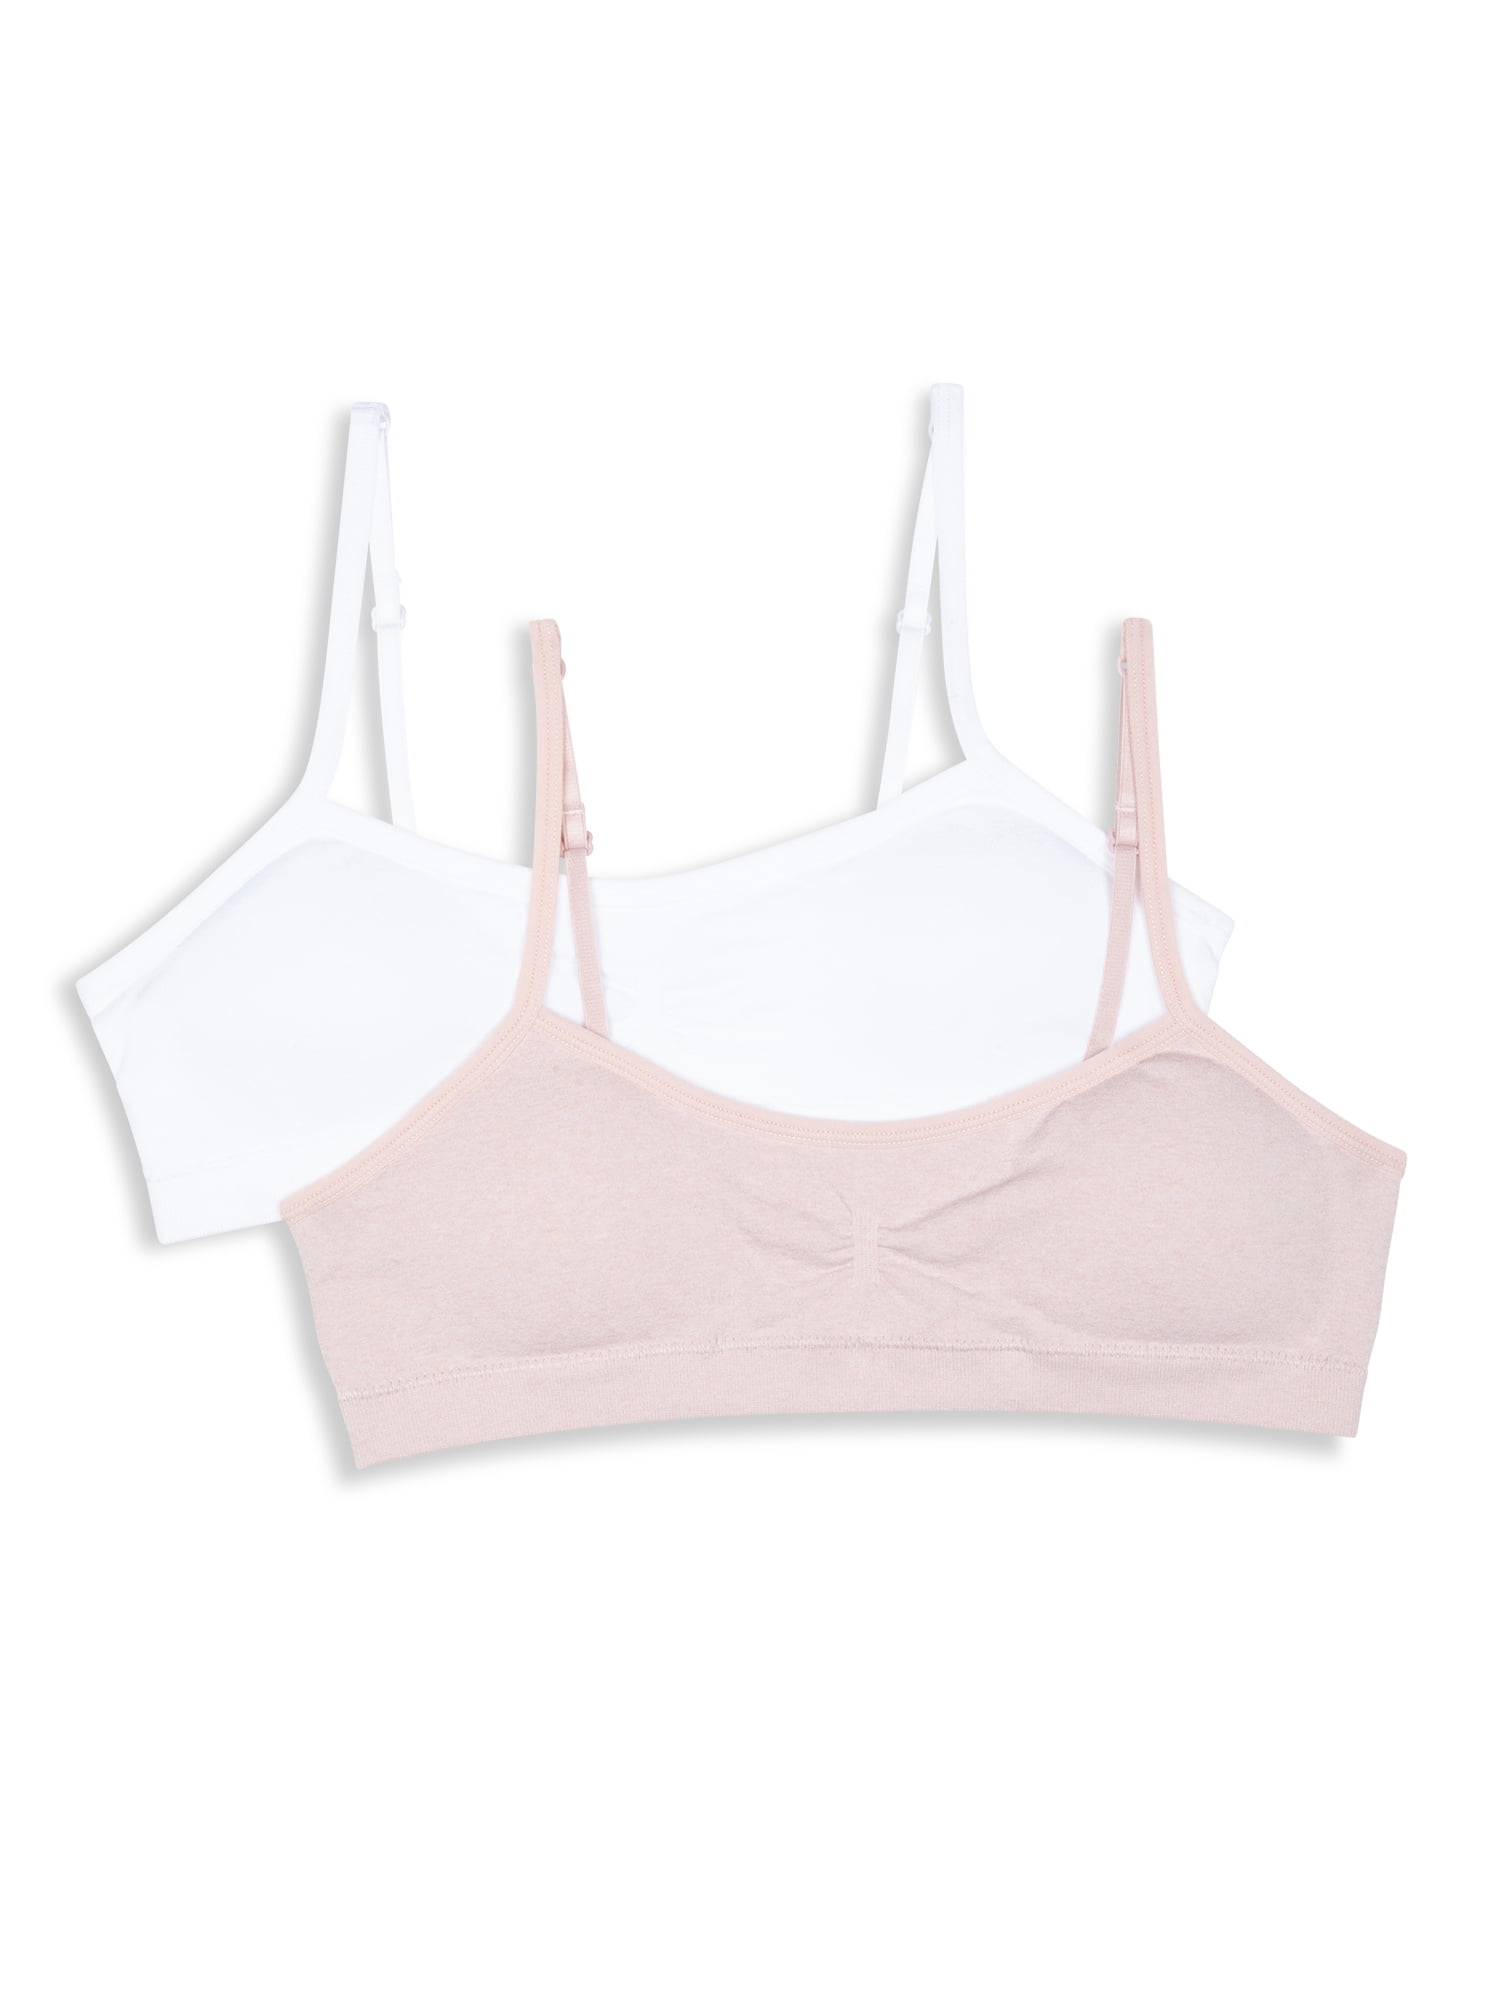 Hanes Girls' 2 Pack Pointelle Square Neck Bralette Pink/White Size